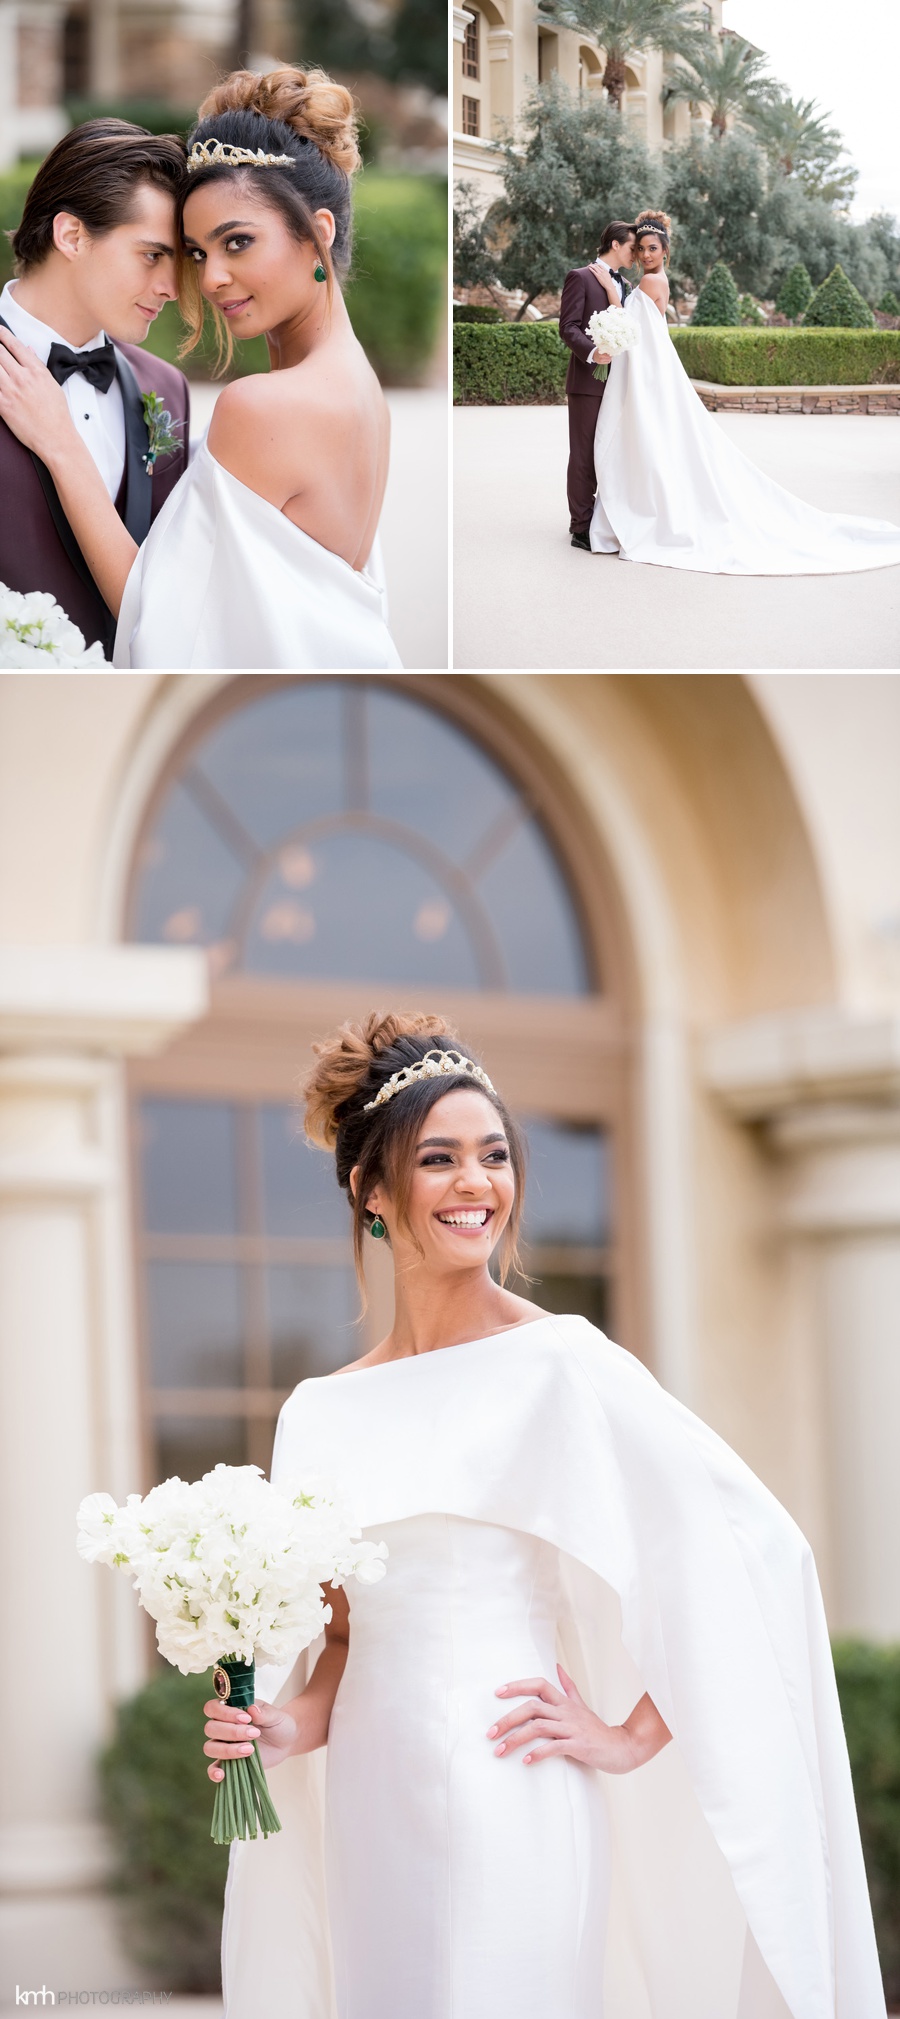 Royal Wedding Inspiration | Green Valley Ranch Resort in Las Vegas, NV | KMH Photography, Las Vegas Wedding Photographer